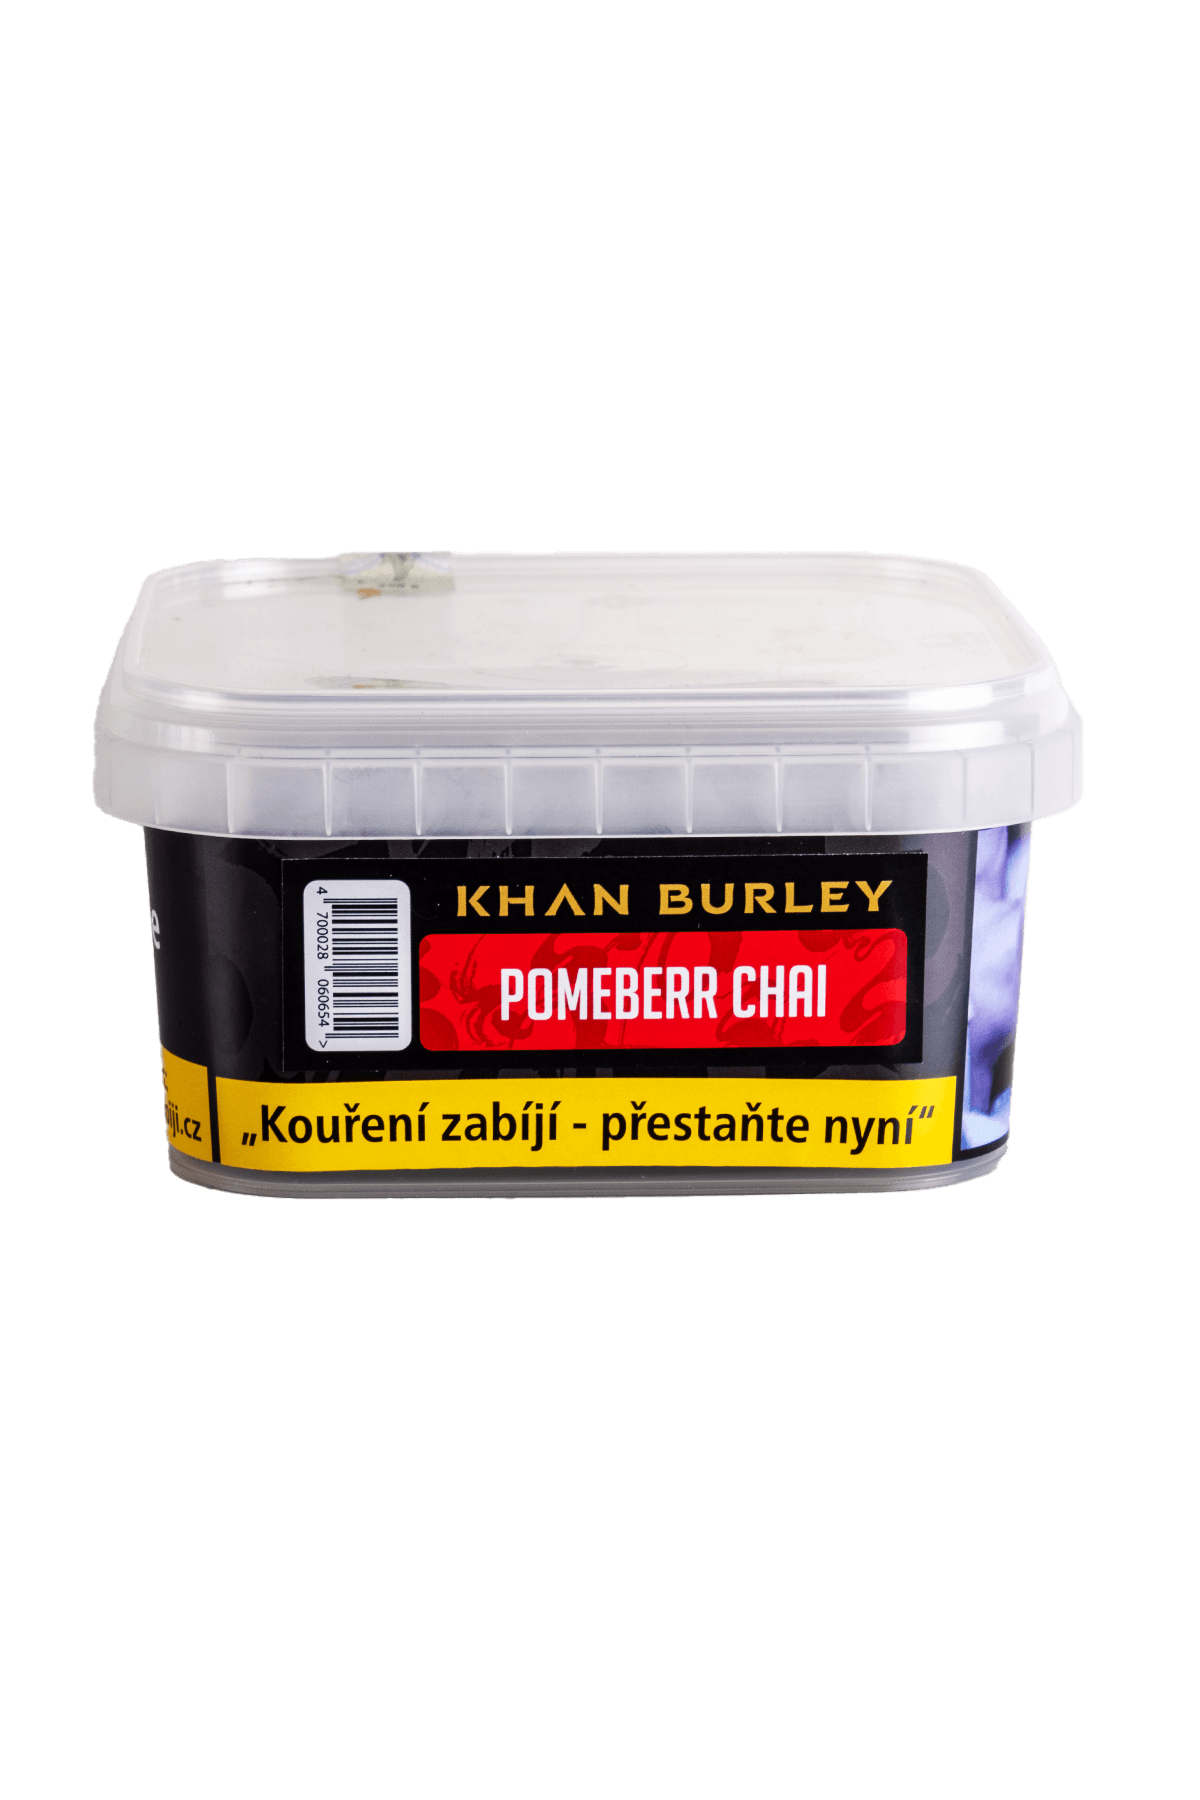 Tabák - Khan Burley 250g - Pomeberry Chai